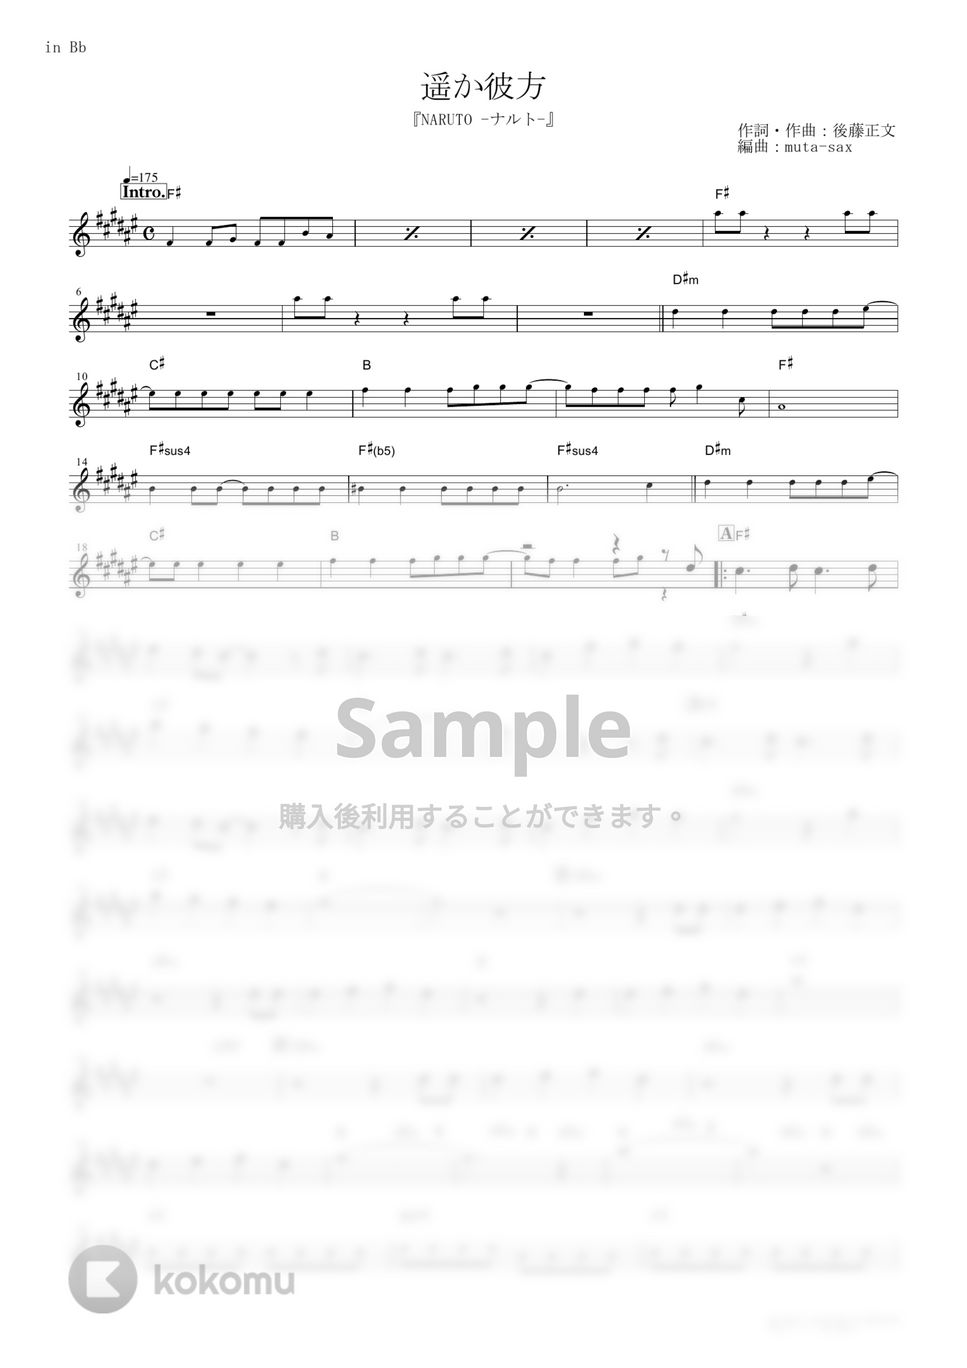 ASIAN KUNG-FU GENERATION - 遥か彼方 (『NARUTO -ナルト-』 / in Bb) by muta-sax